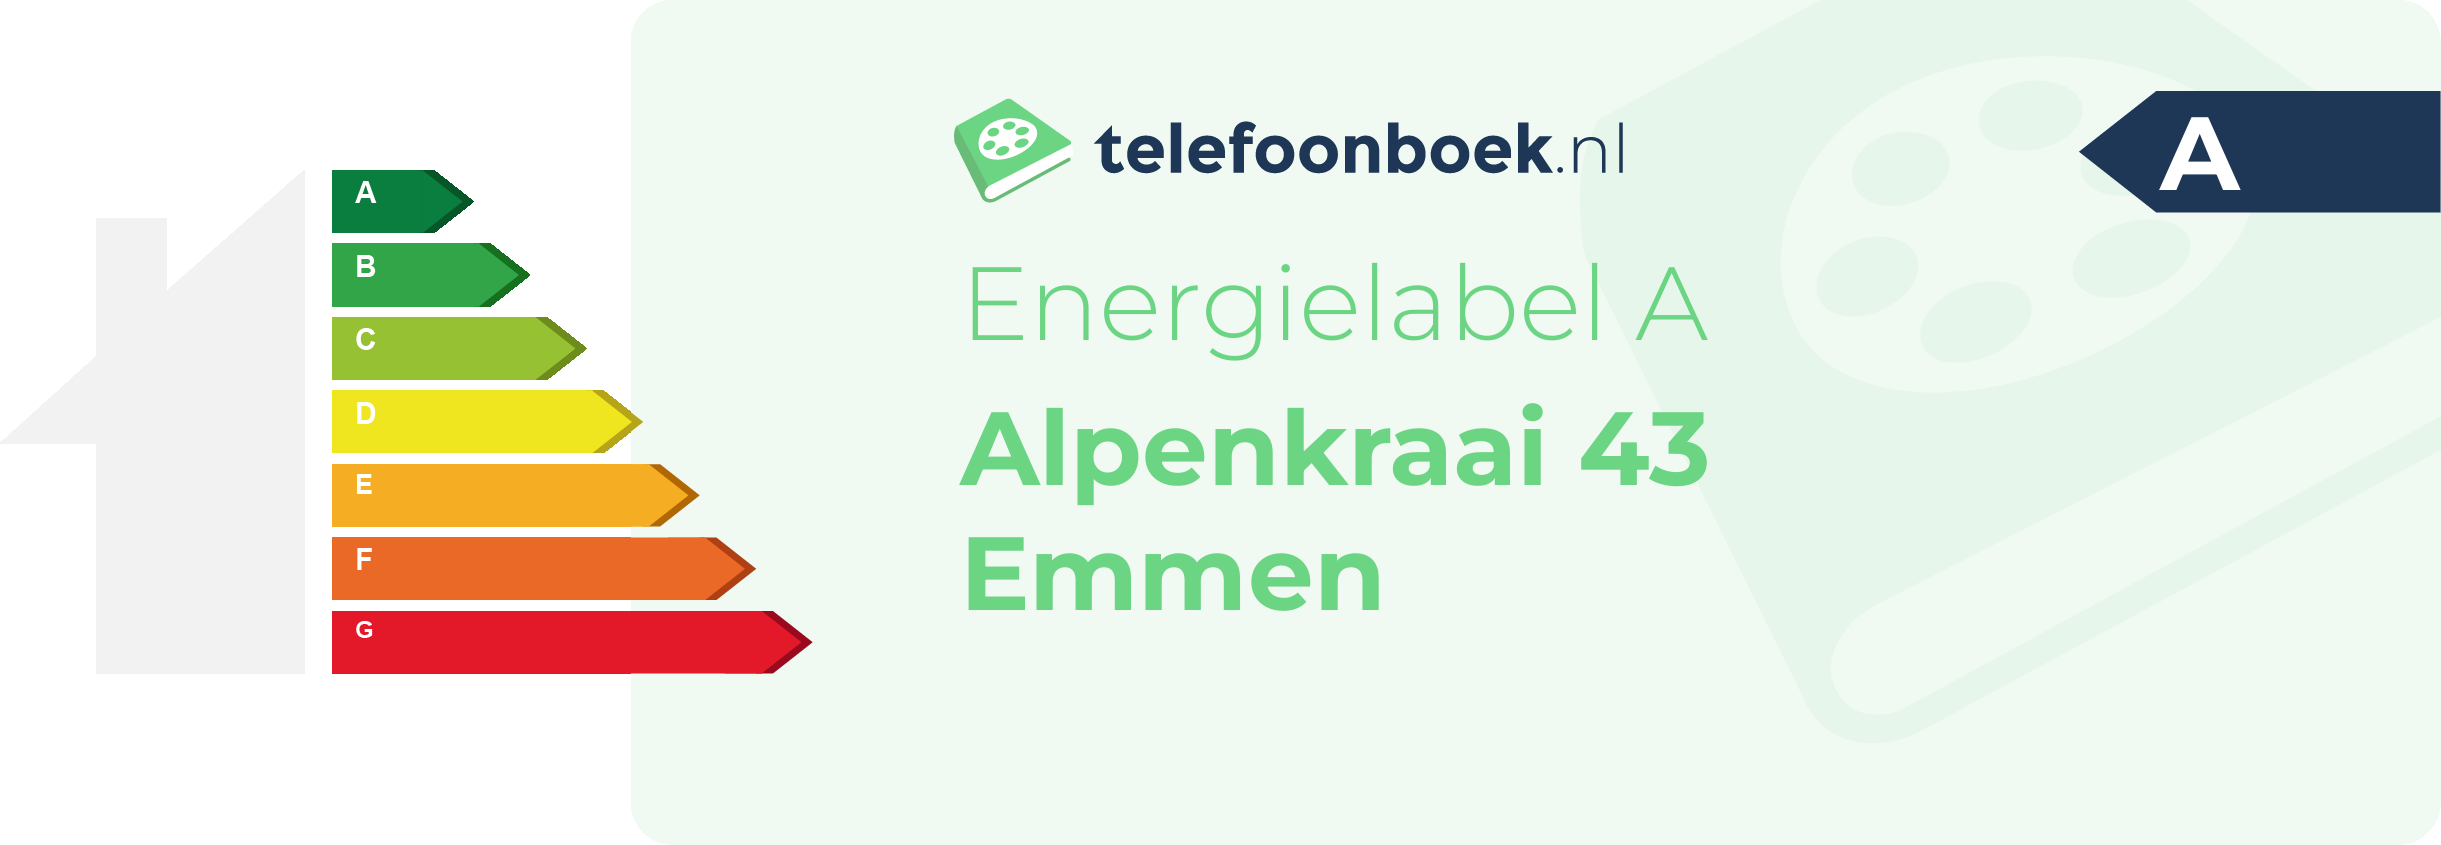 Energielabel Alpenkraai 43 Emmen